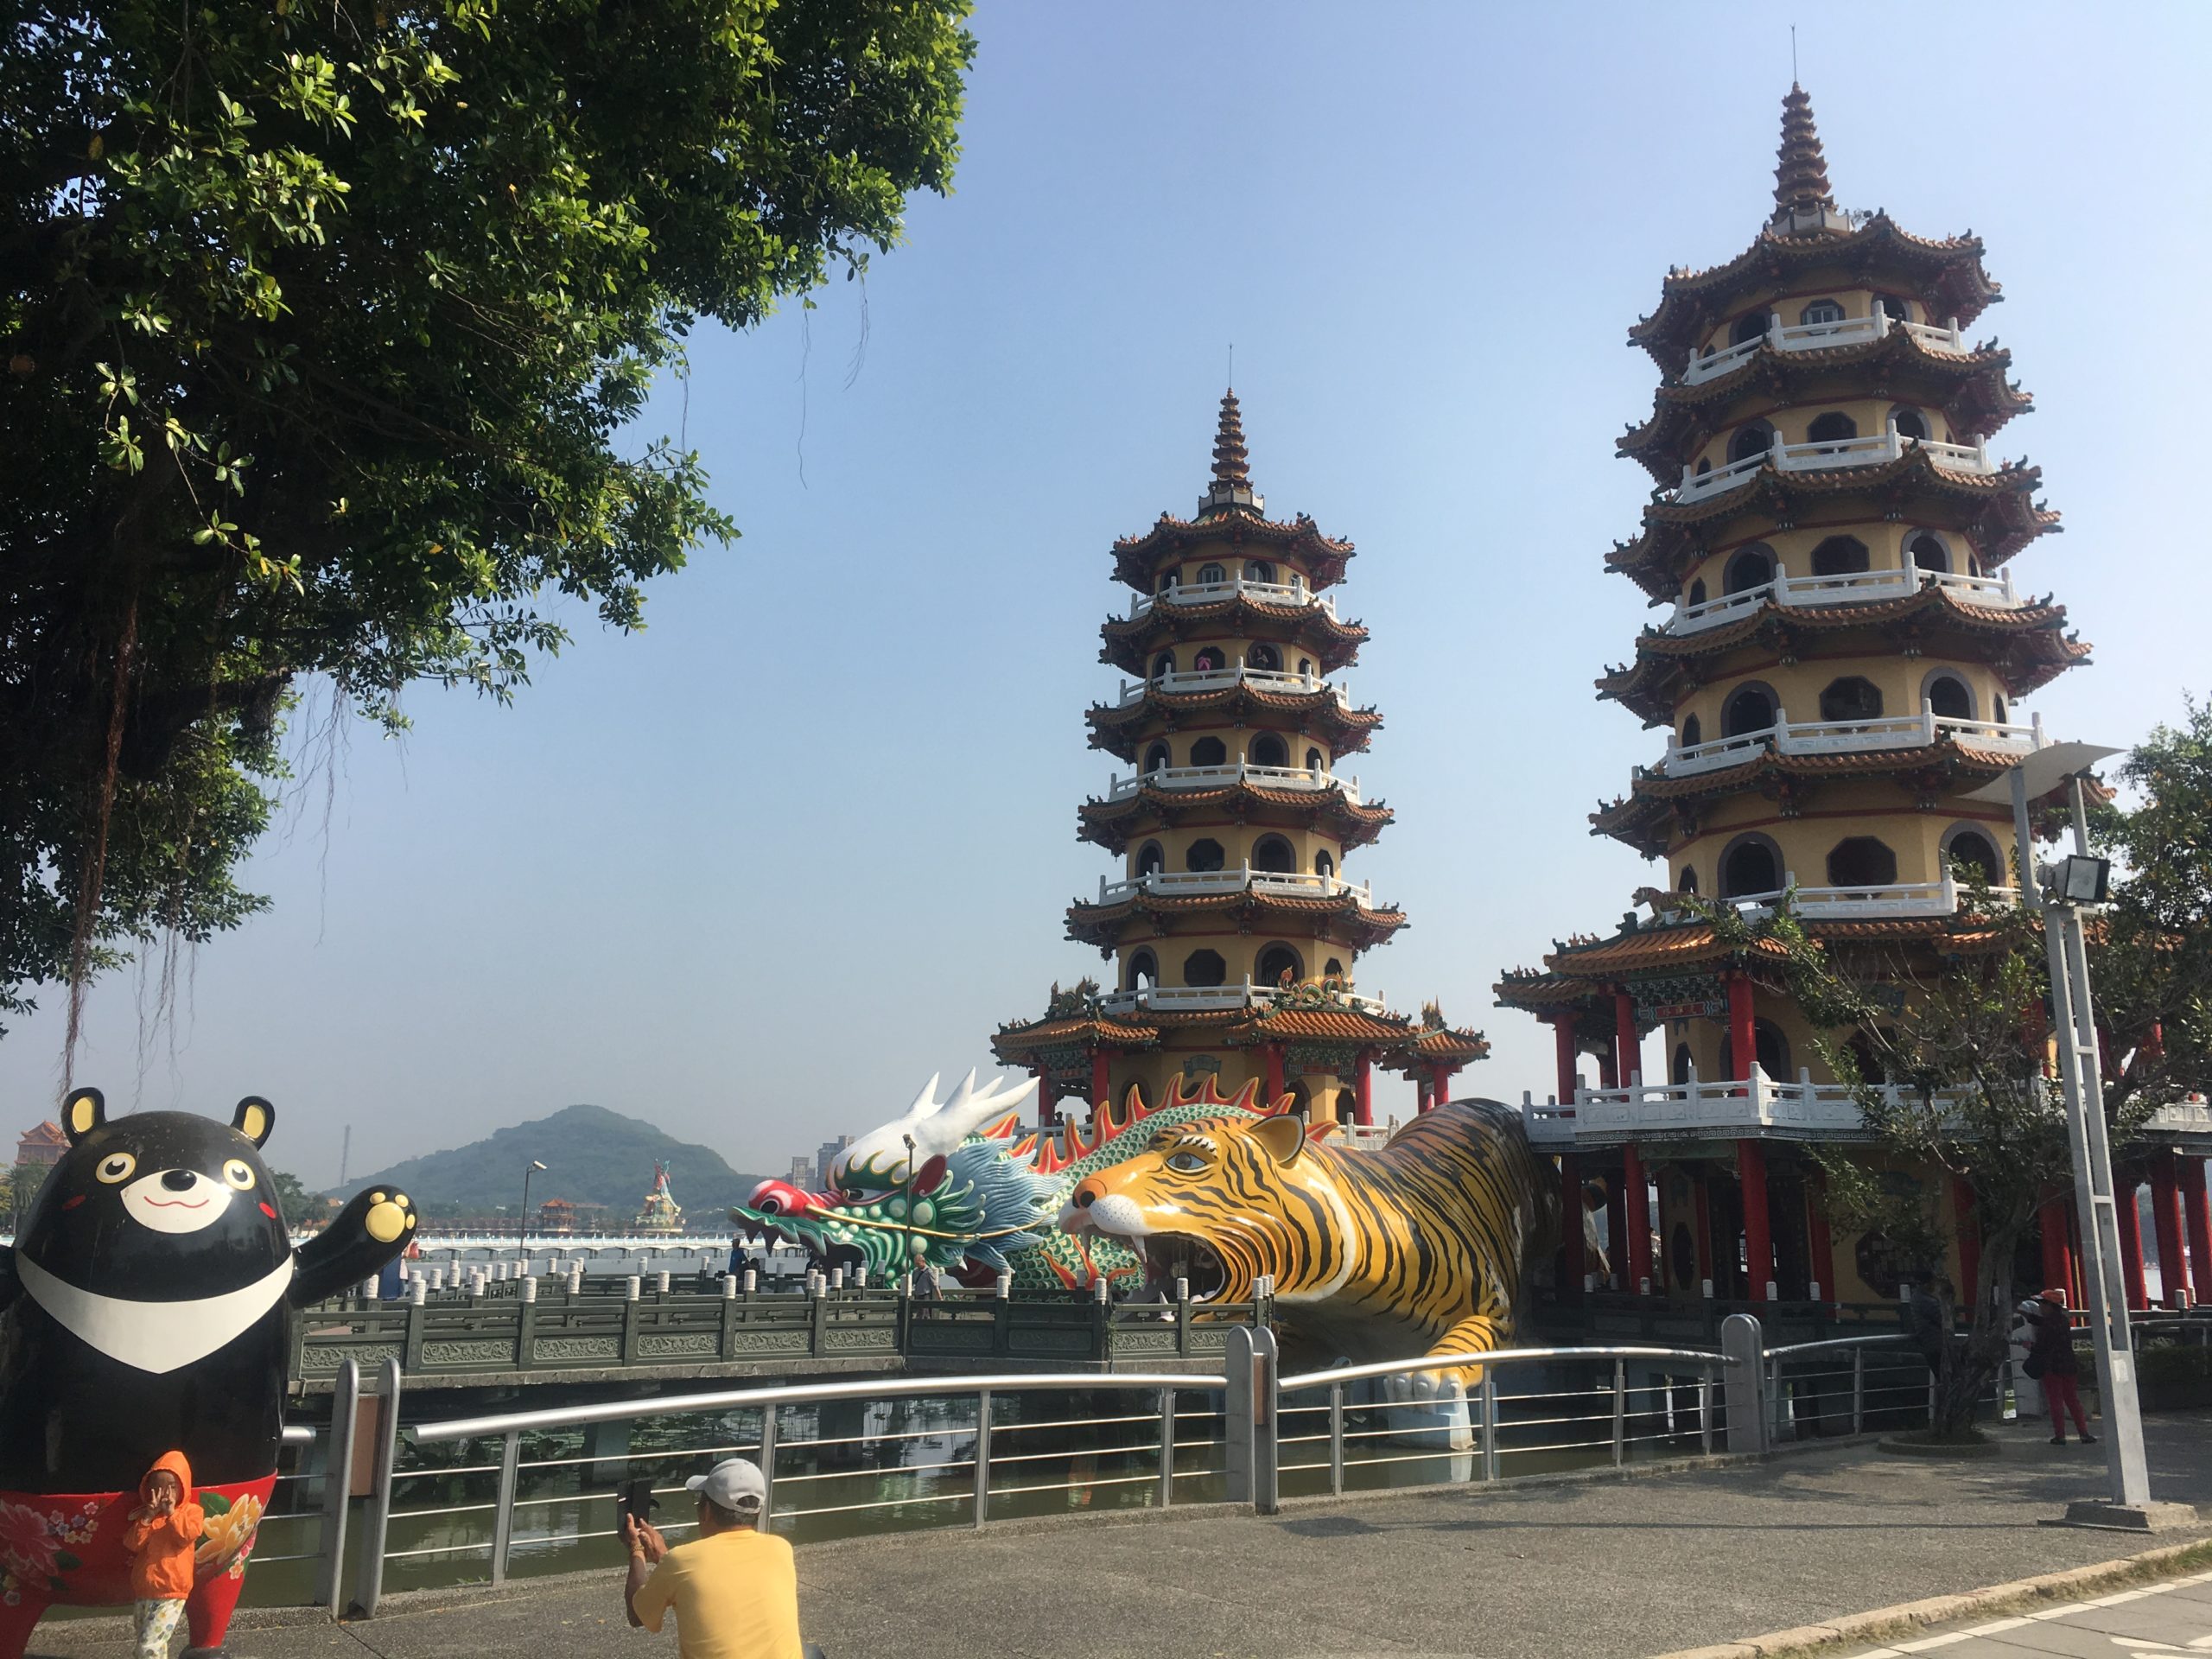 Tiger and Dragon towers at Lotus Pond